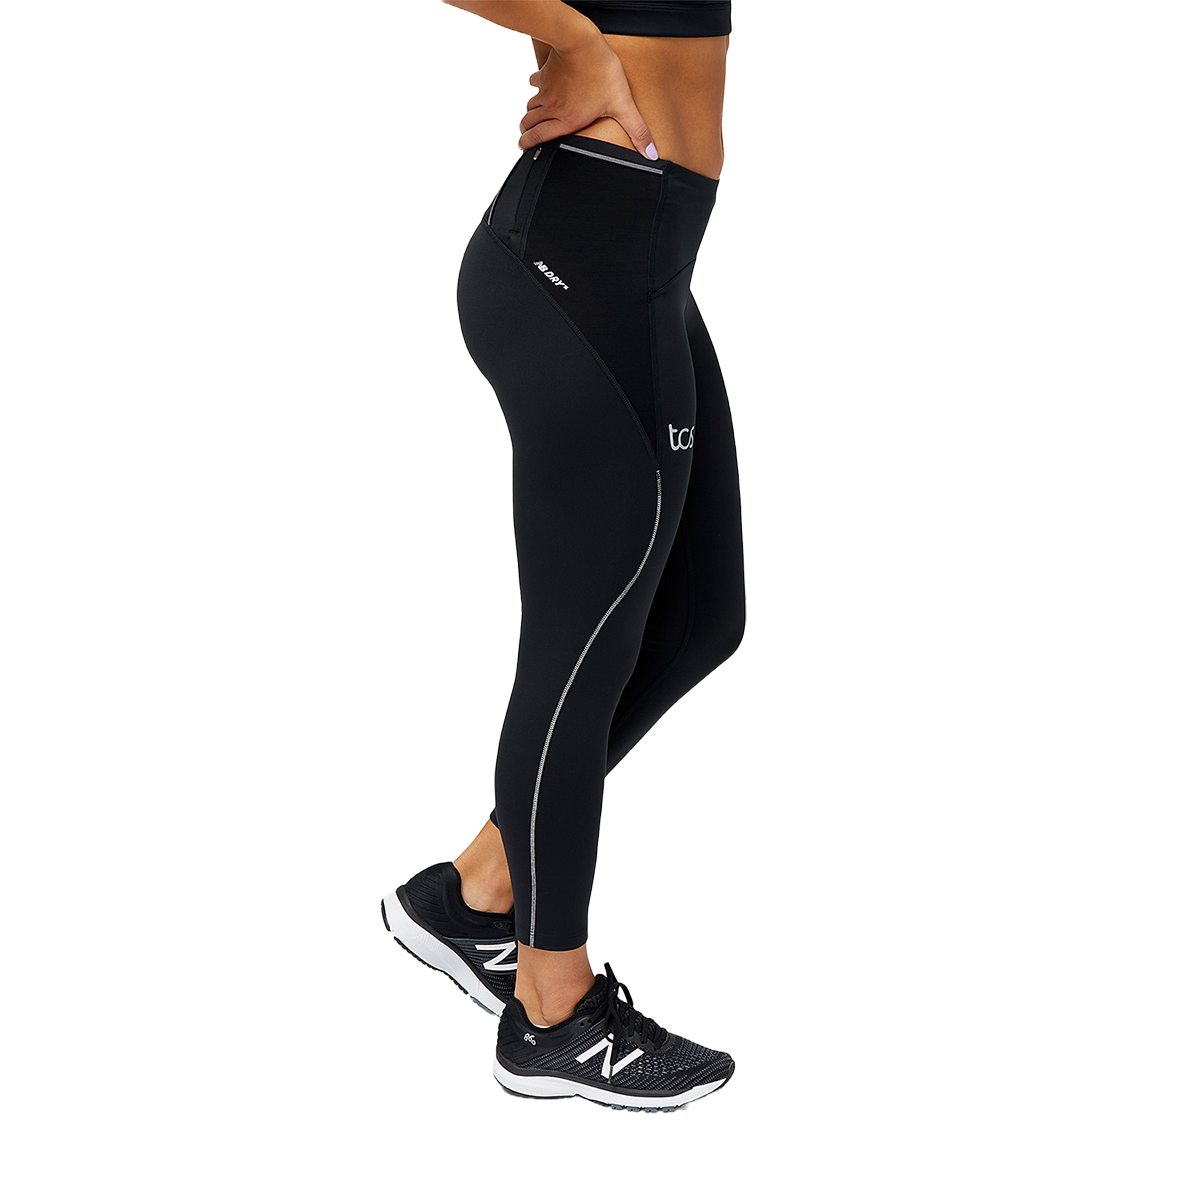 New Balance Impact Run leggings in black